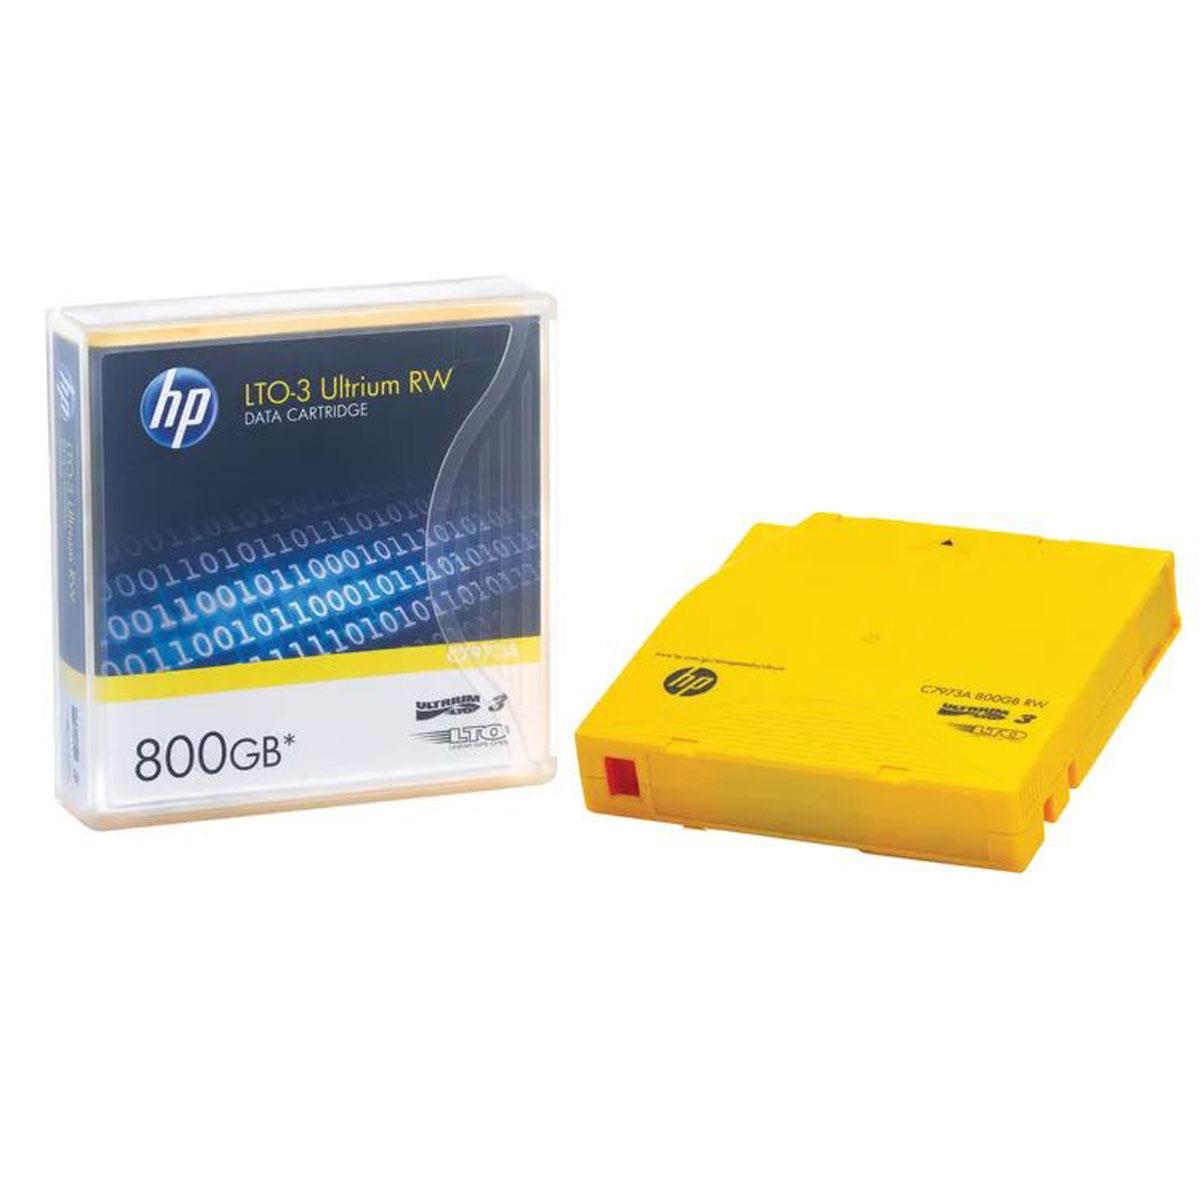 Image of HP LTO-3 Ultrium 800GB Re-writable Data Cartridge